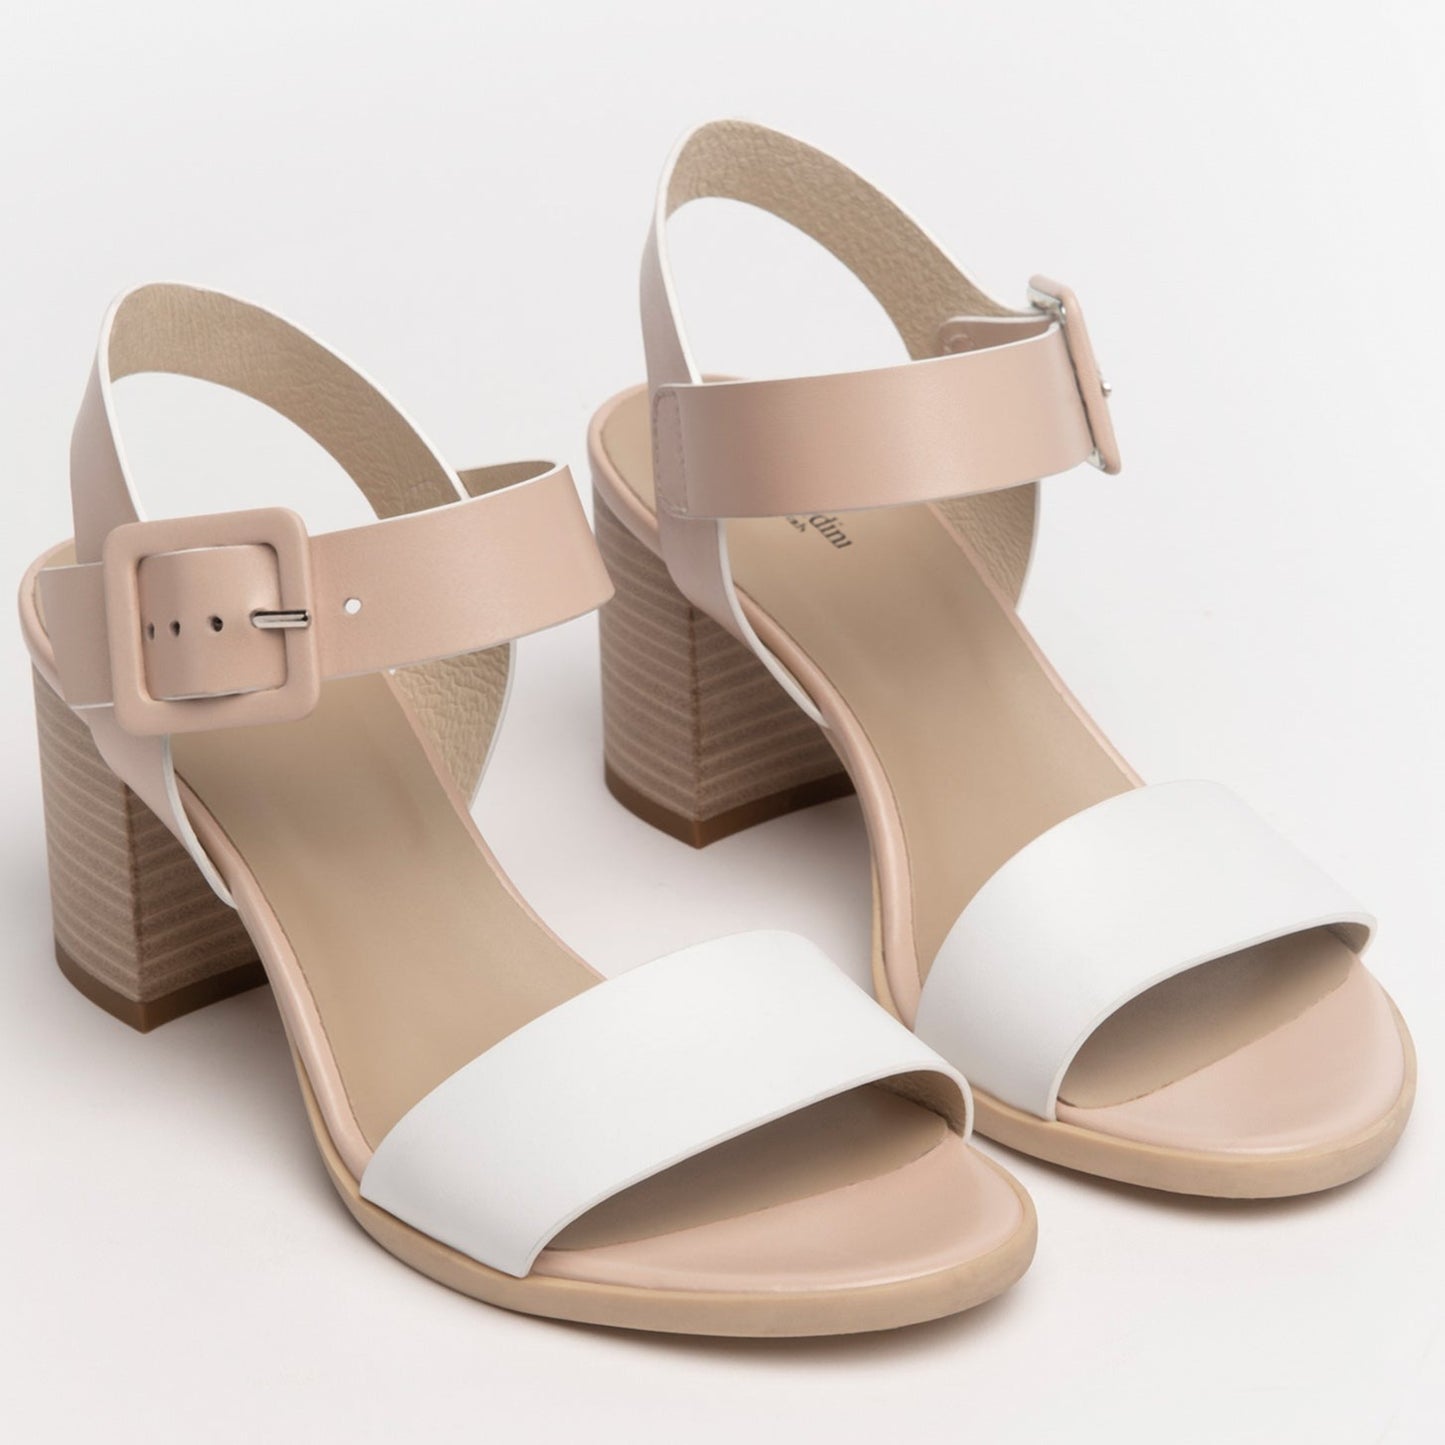 Sandals NeroGiardini women white and pink leather heel